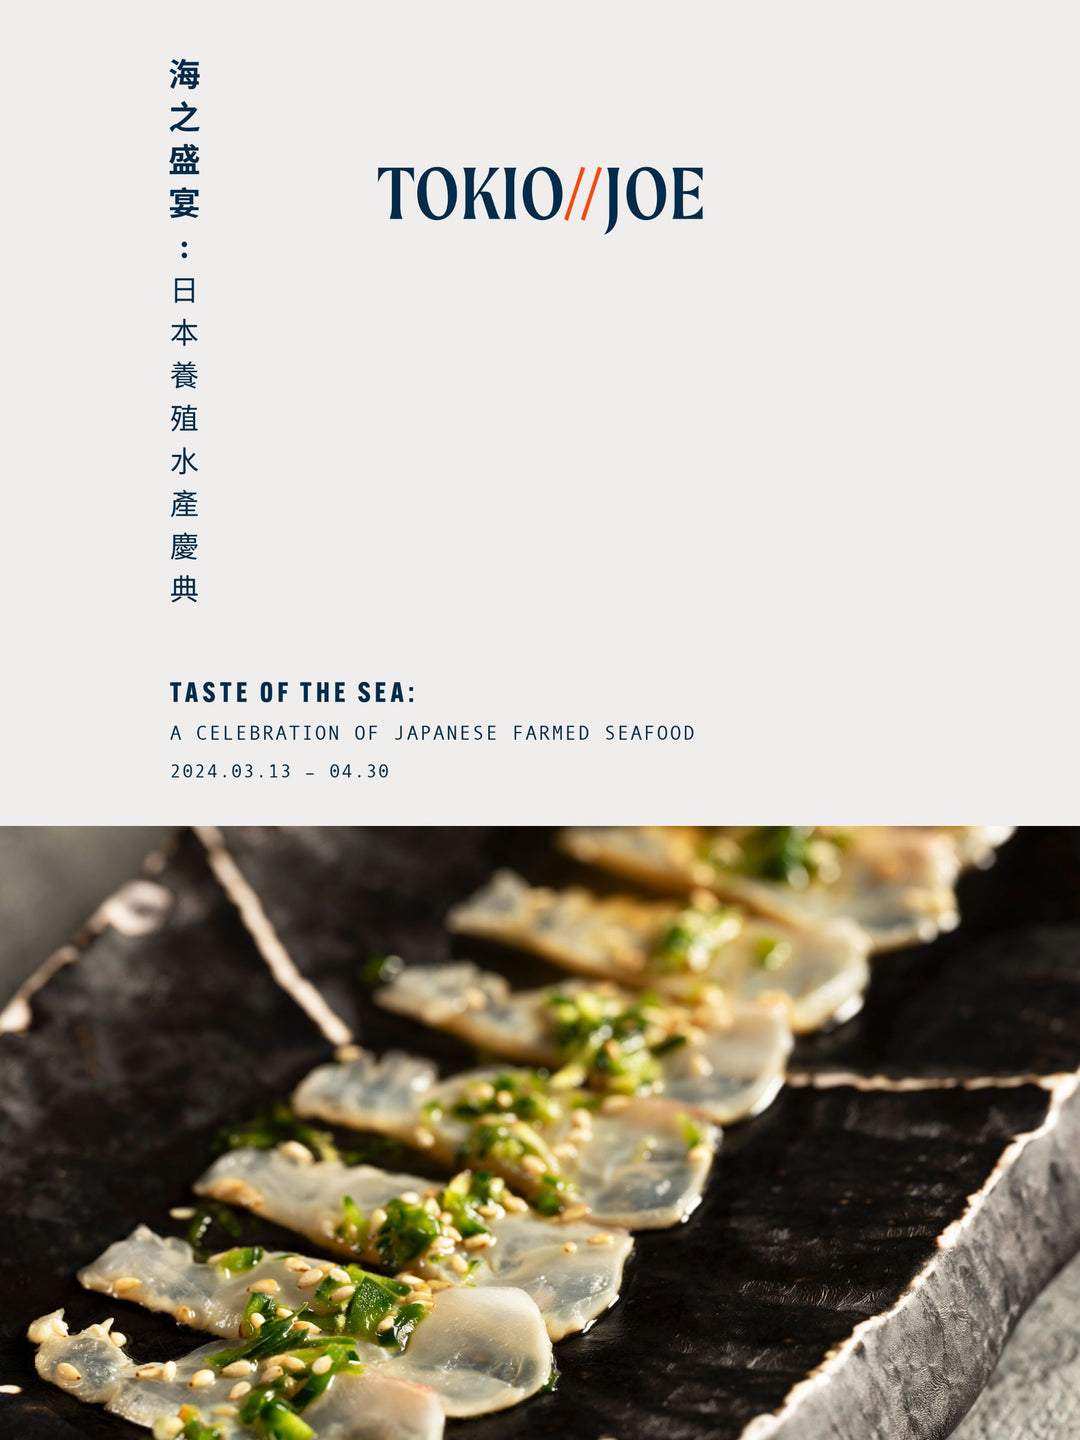 TOKIO JOE 海之盛宴:  日本養殖水產慶典